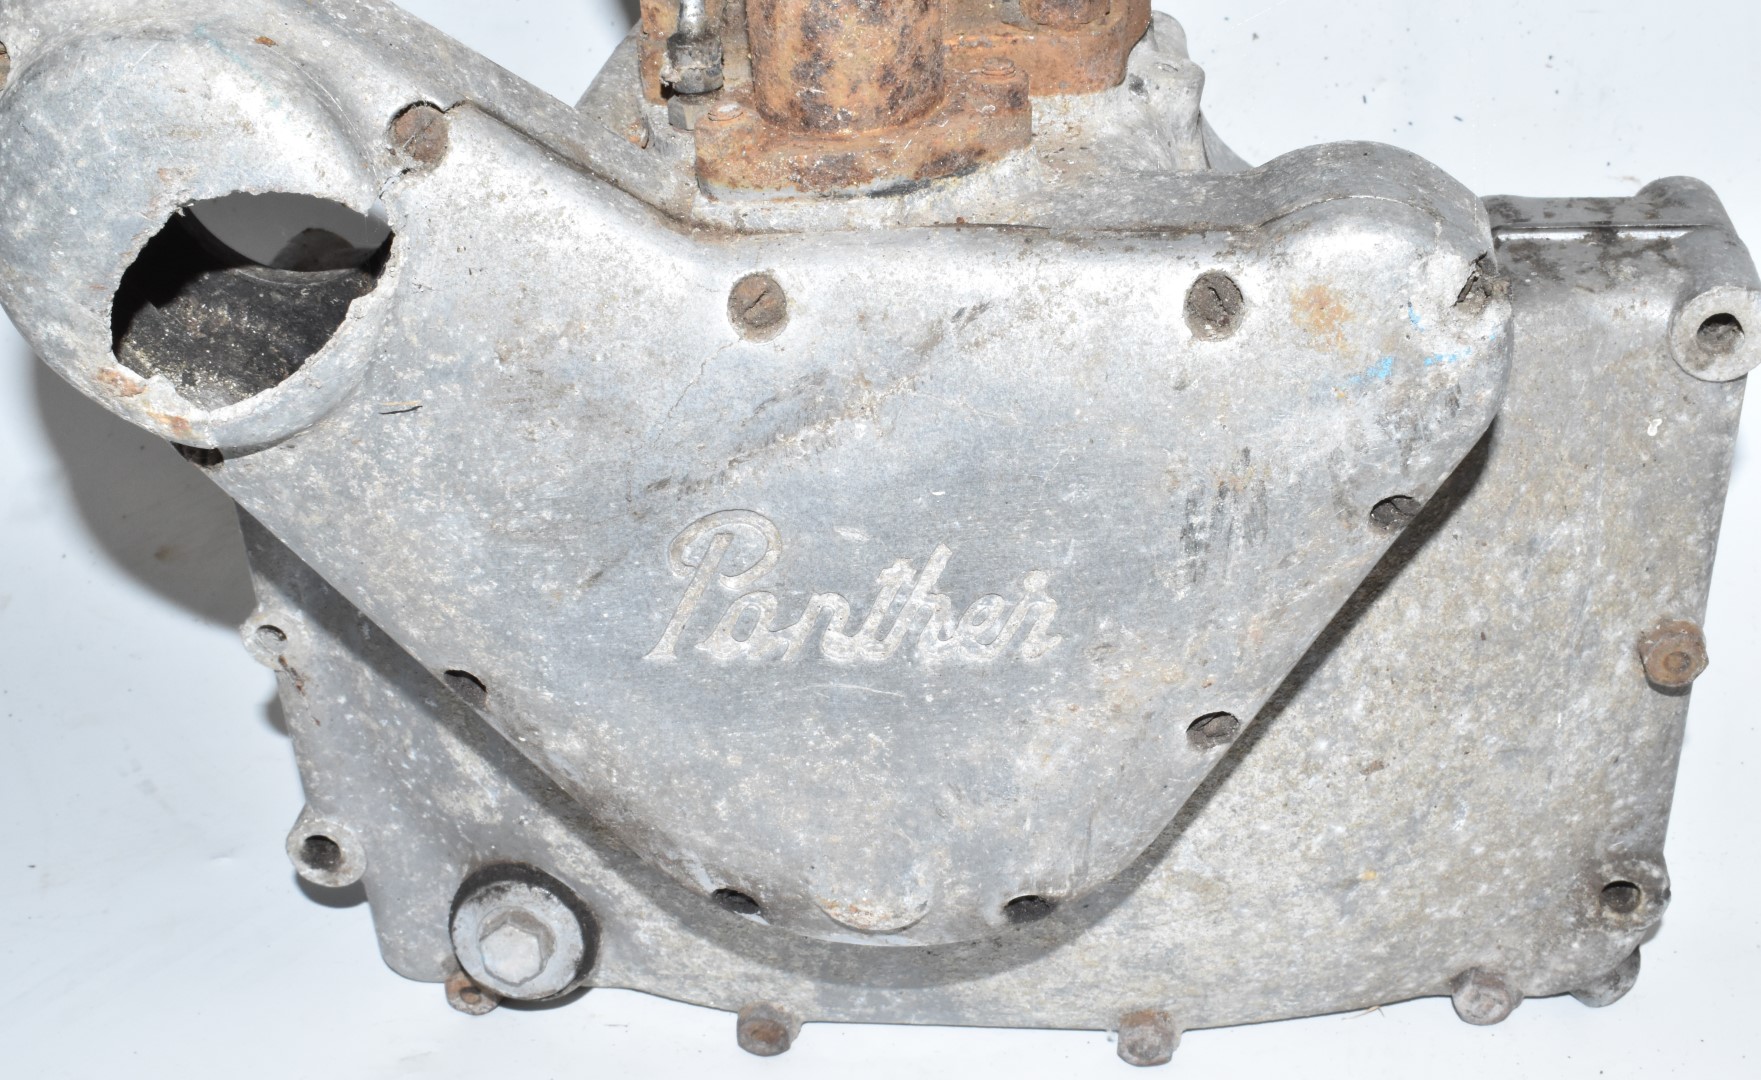 1953 Panther model 65 250cc overhead valve motorbike engine - Image 2 of 5